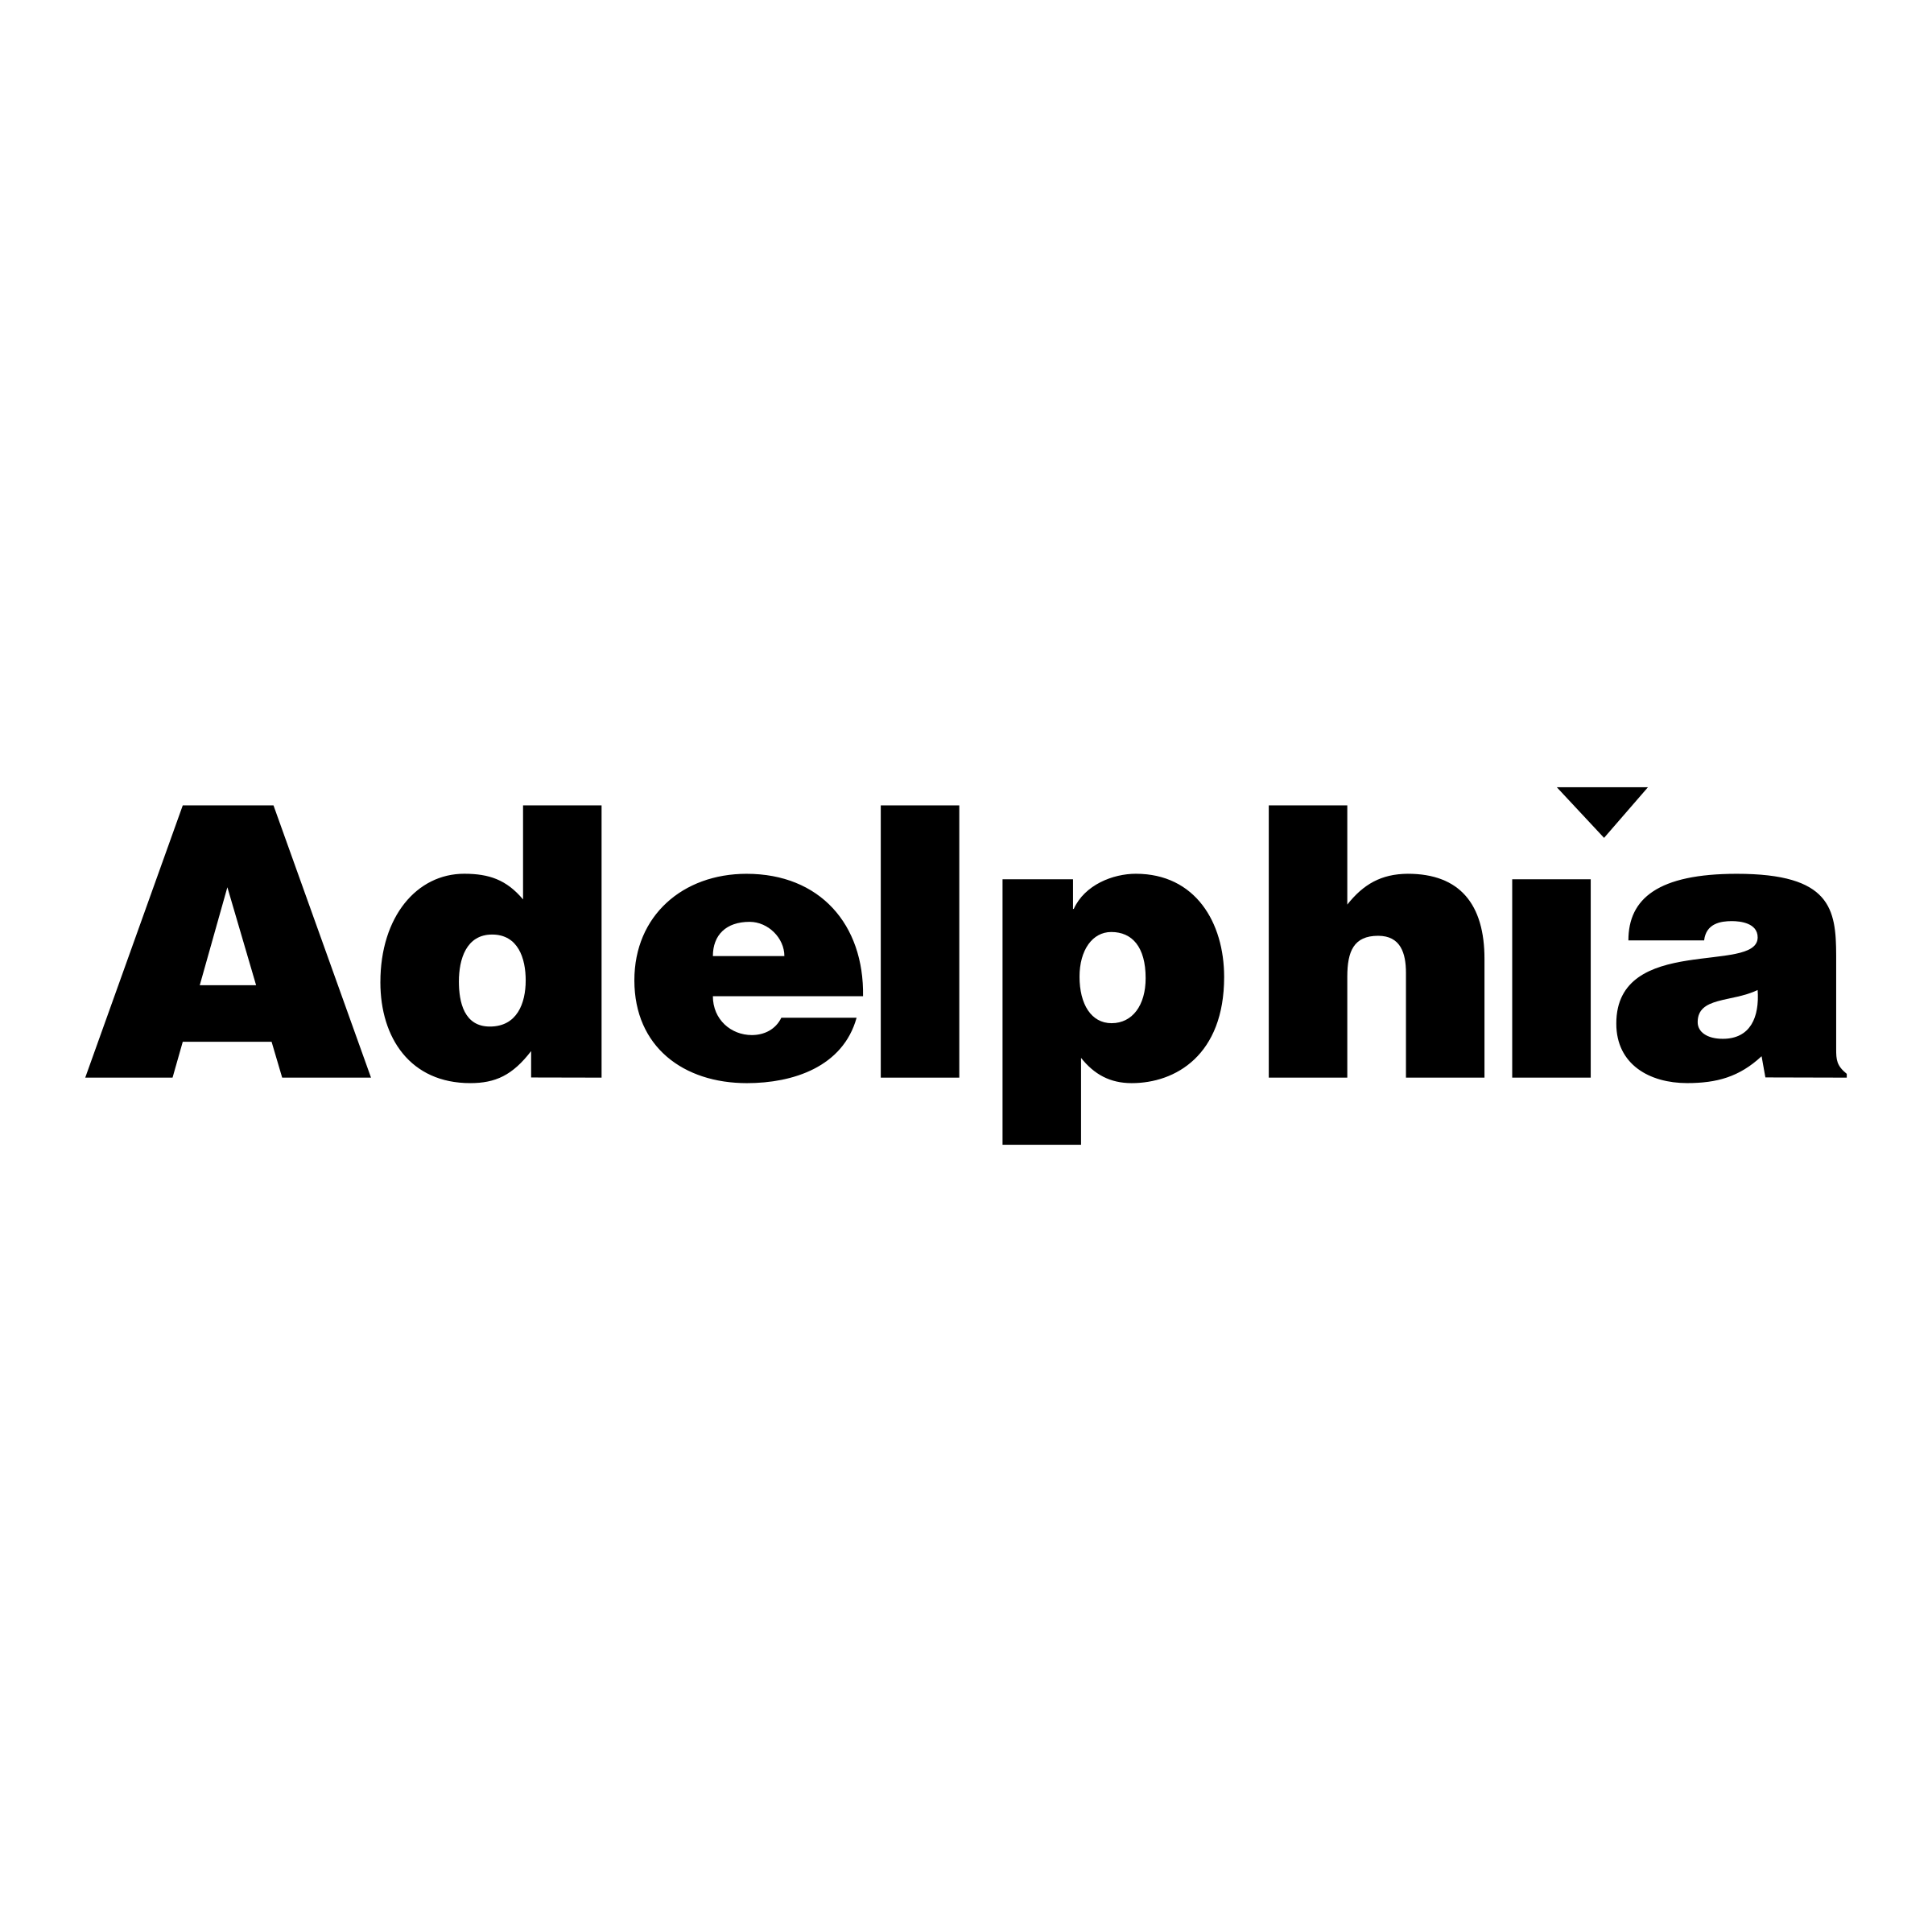 Adelphia Logo - Adelphia Logo PNG Transparent & SVG Vector - Freebie Supply